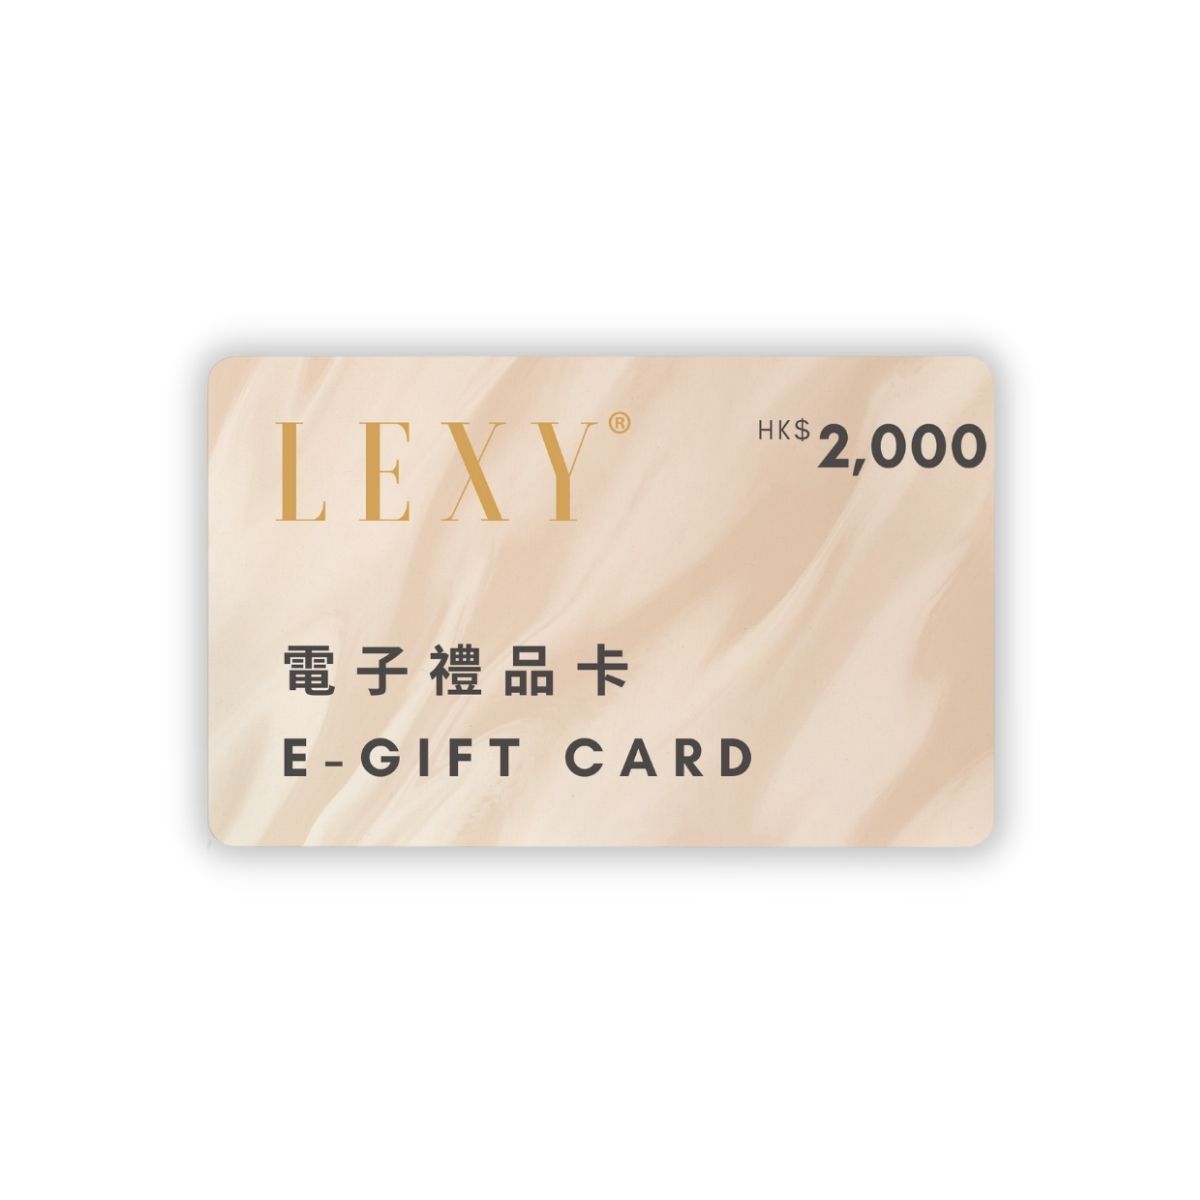 LEXY ® LEXY ® e-Gift Cards 電子禮品卡 Gift Cards HK$2,000.00 購買